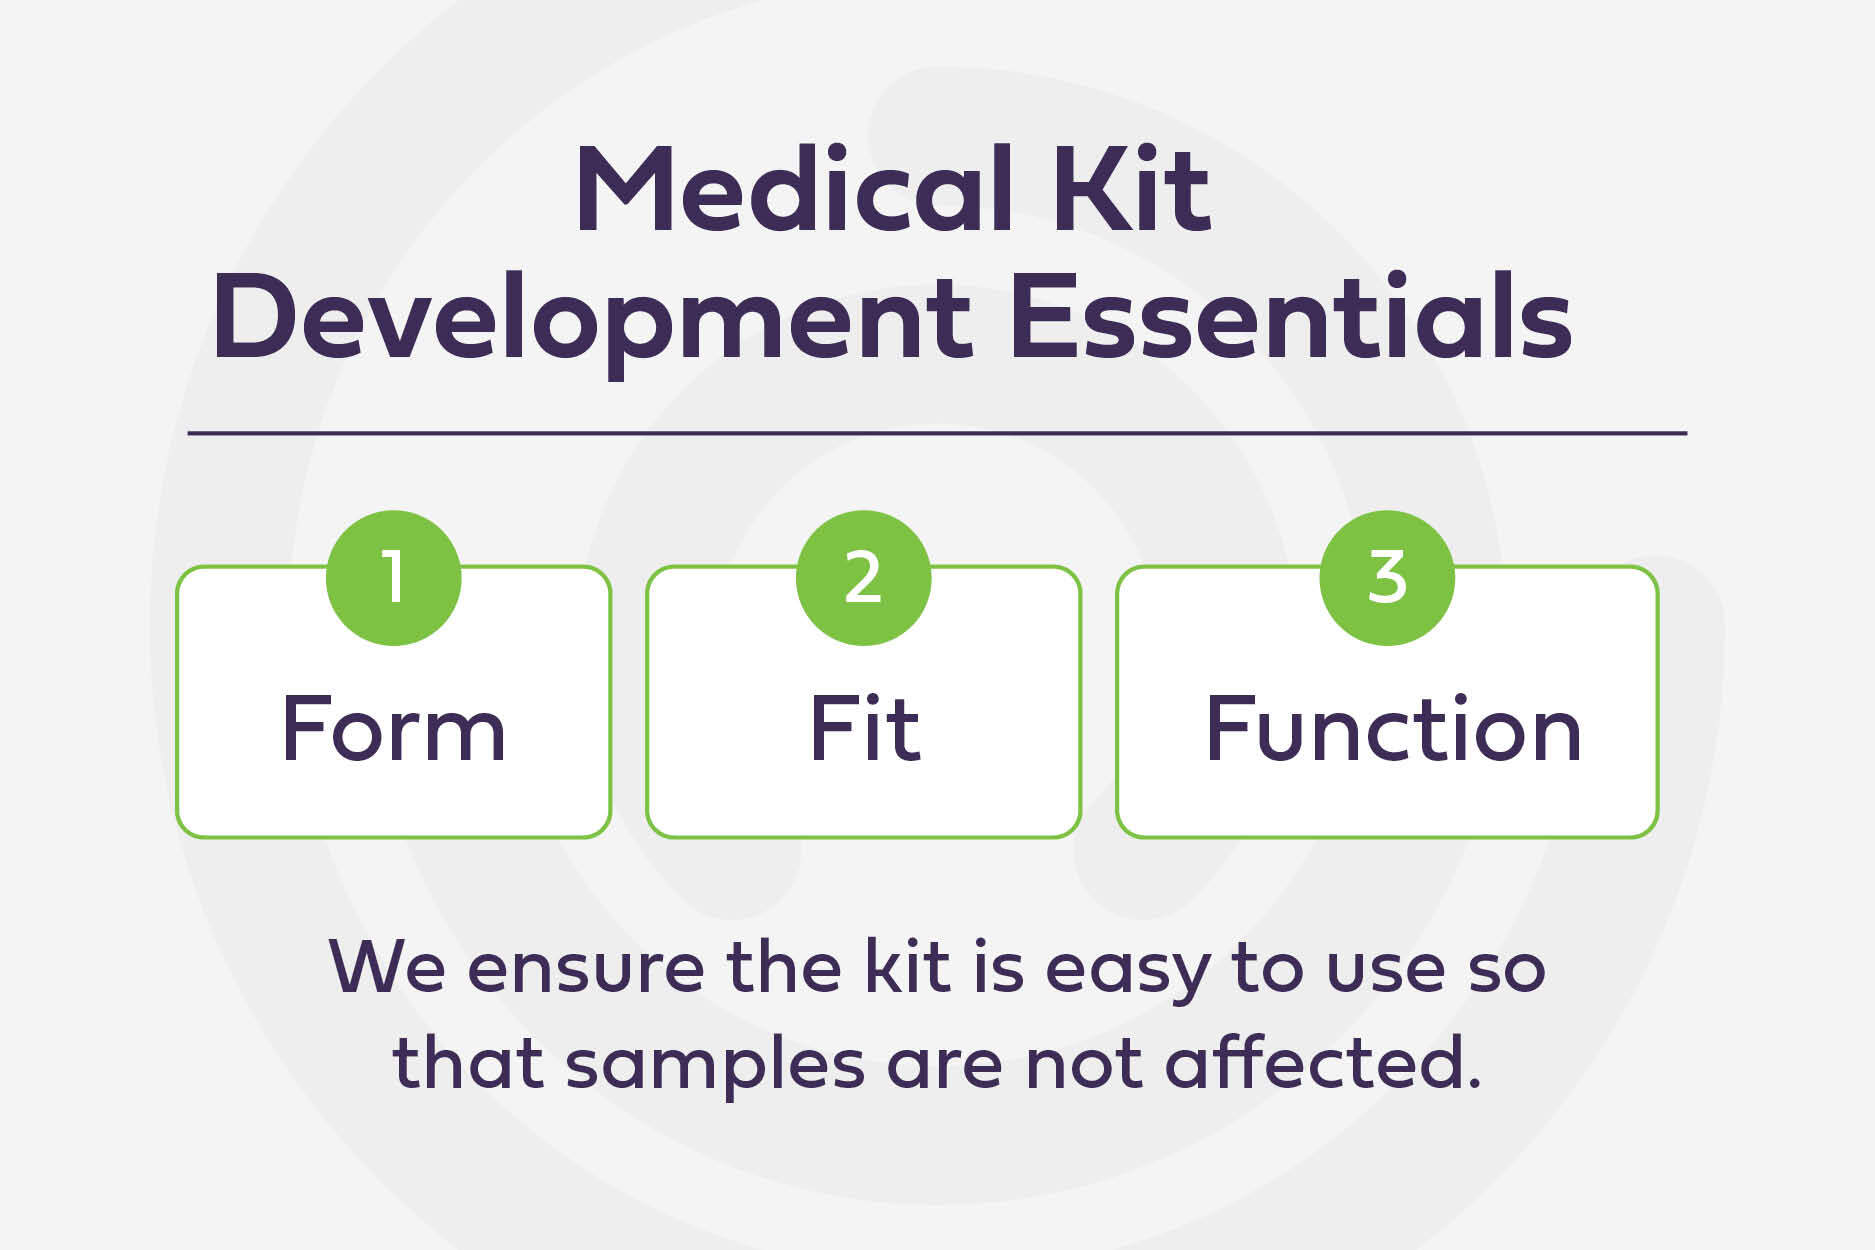 Infographic for Medical Kit development essentials. 